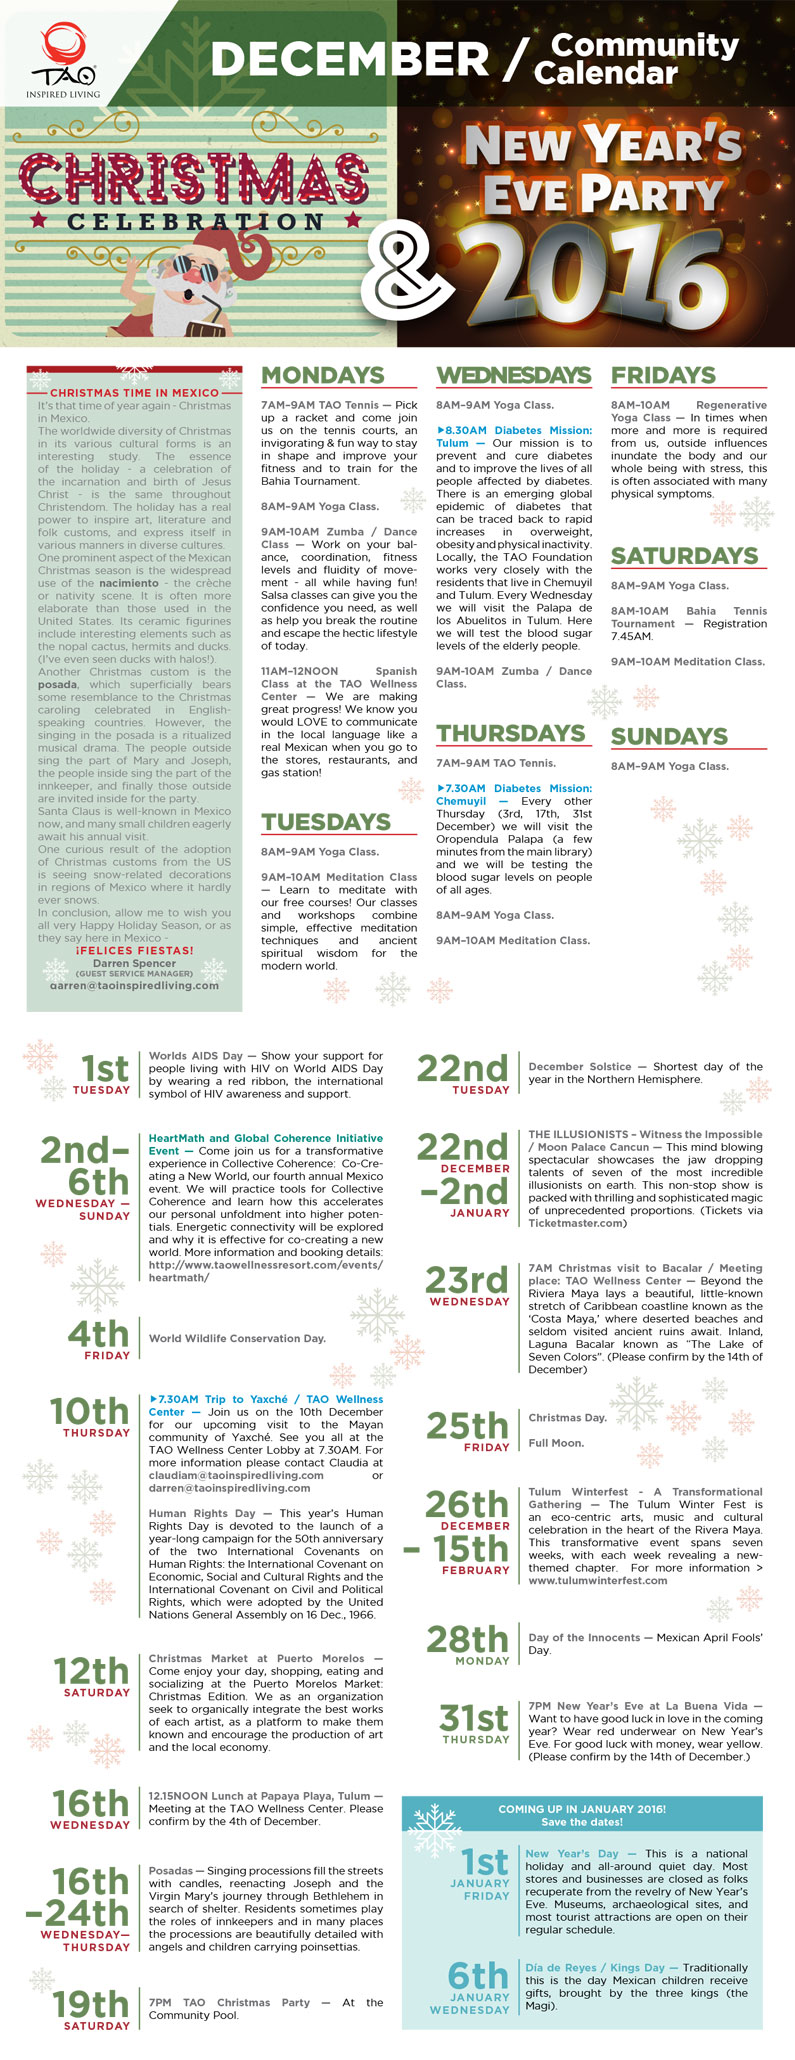 TAO Community Calendar / December 2015